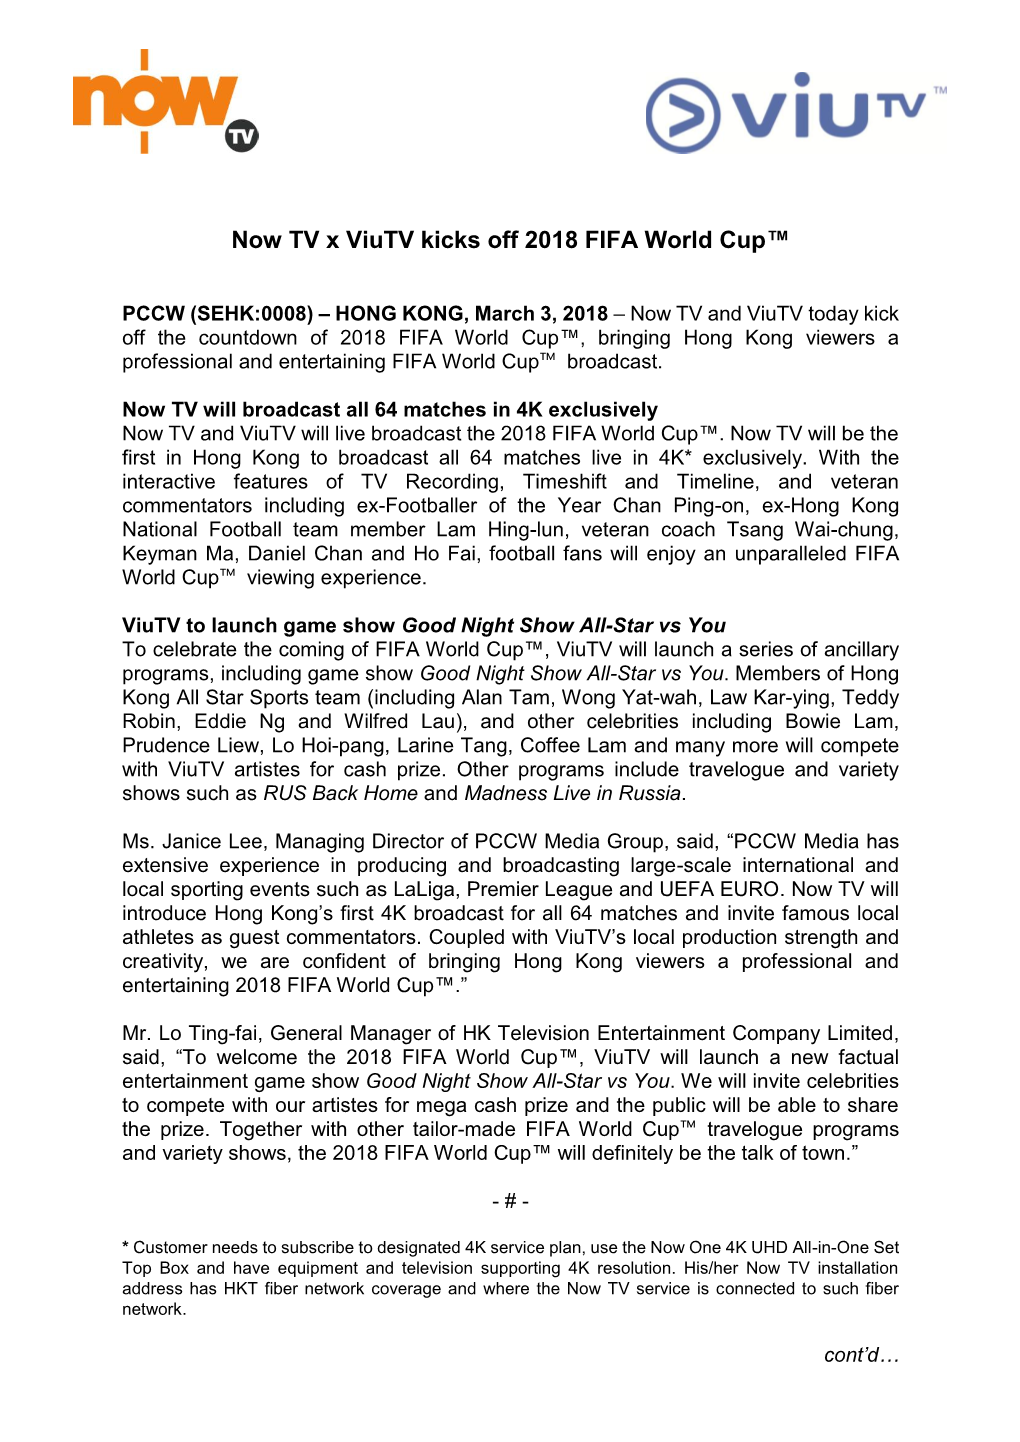 Now TV X Viutv Kicks Off 2018 FIFA World Cup™